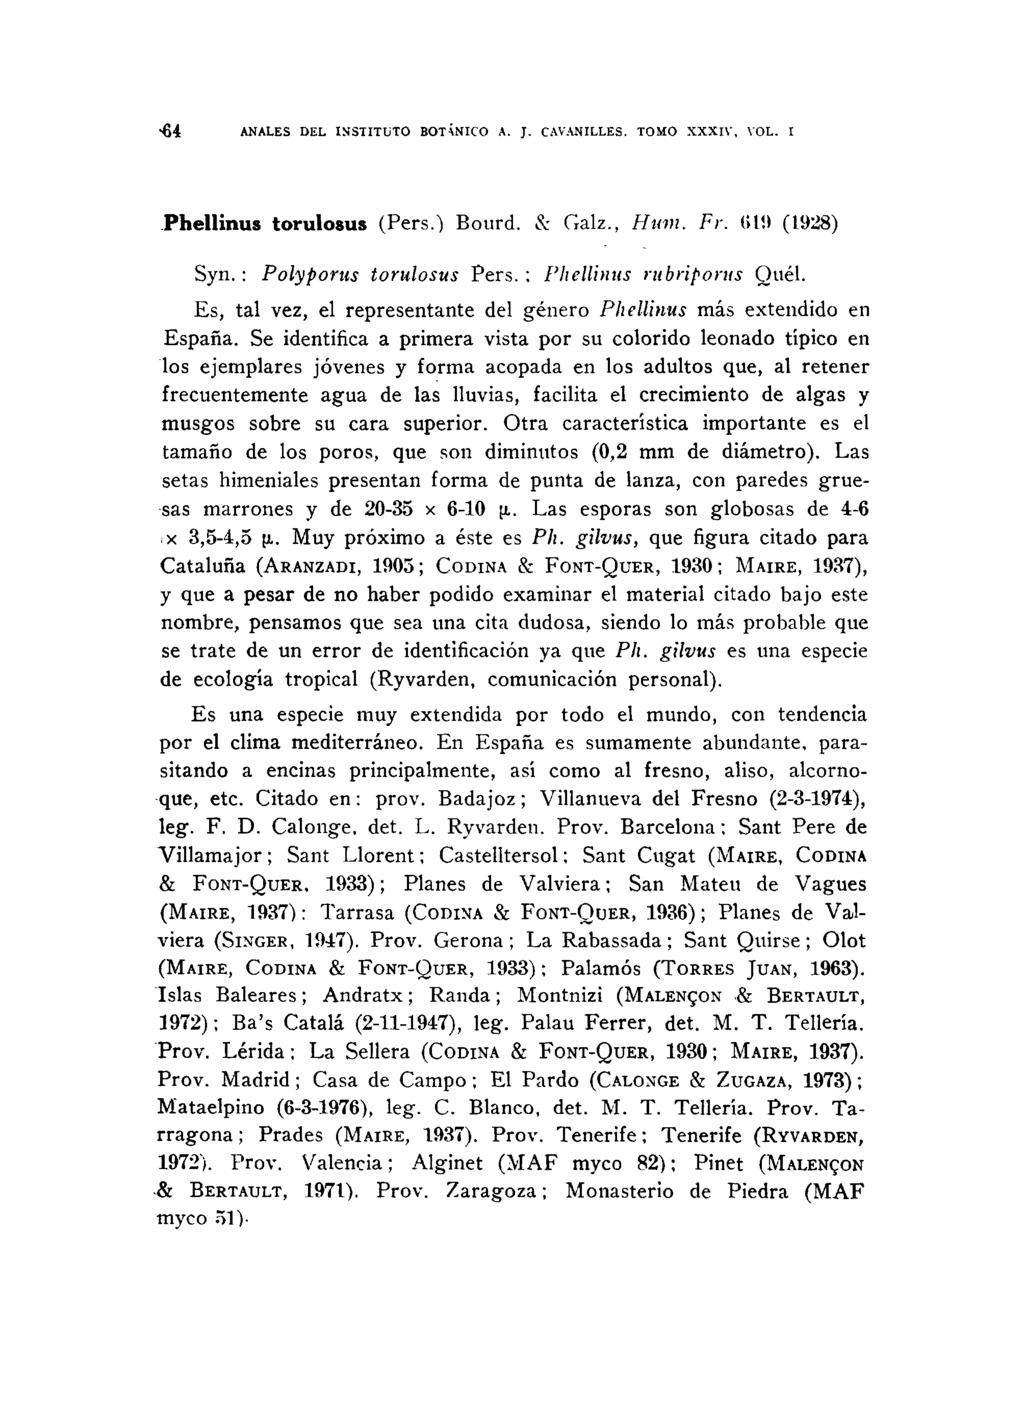 64 ANALES DEL INSTITUTO BOTÁNICO A. J. CAVANILLES. TOMO XXXIV, VOL. I Phellinus torulosus (Pers.) Bourd. & Galz., Hum. Fr. (ilí) (1928) Syn.: Polyporus torulosus Pers. ; Phellinus rubriporus Quél.